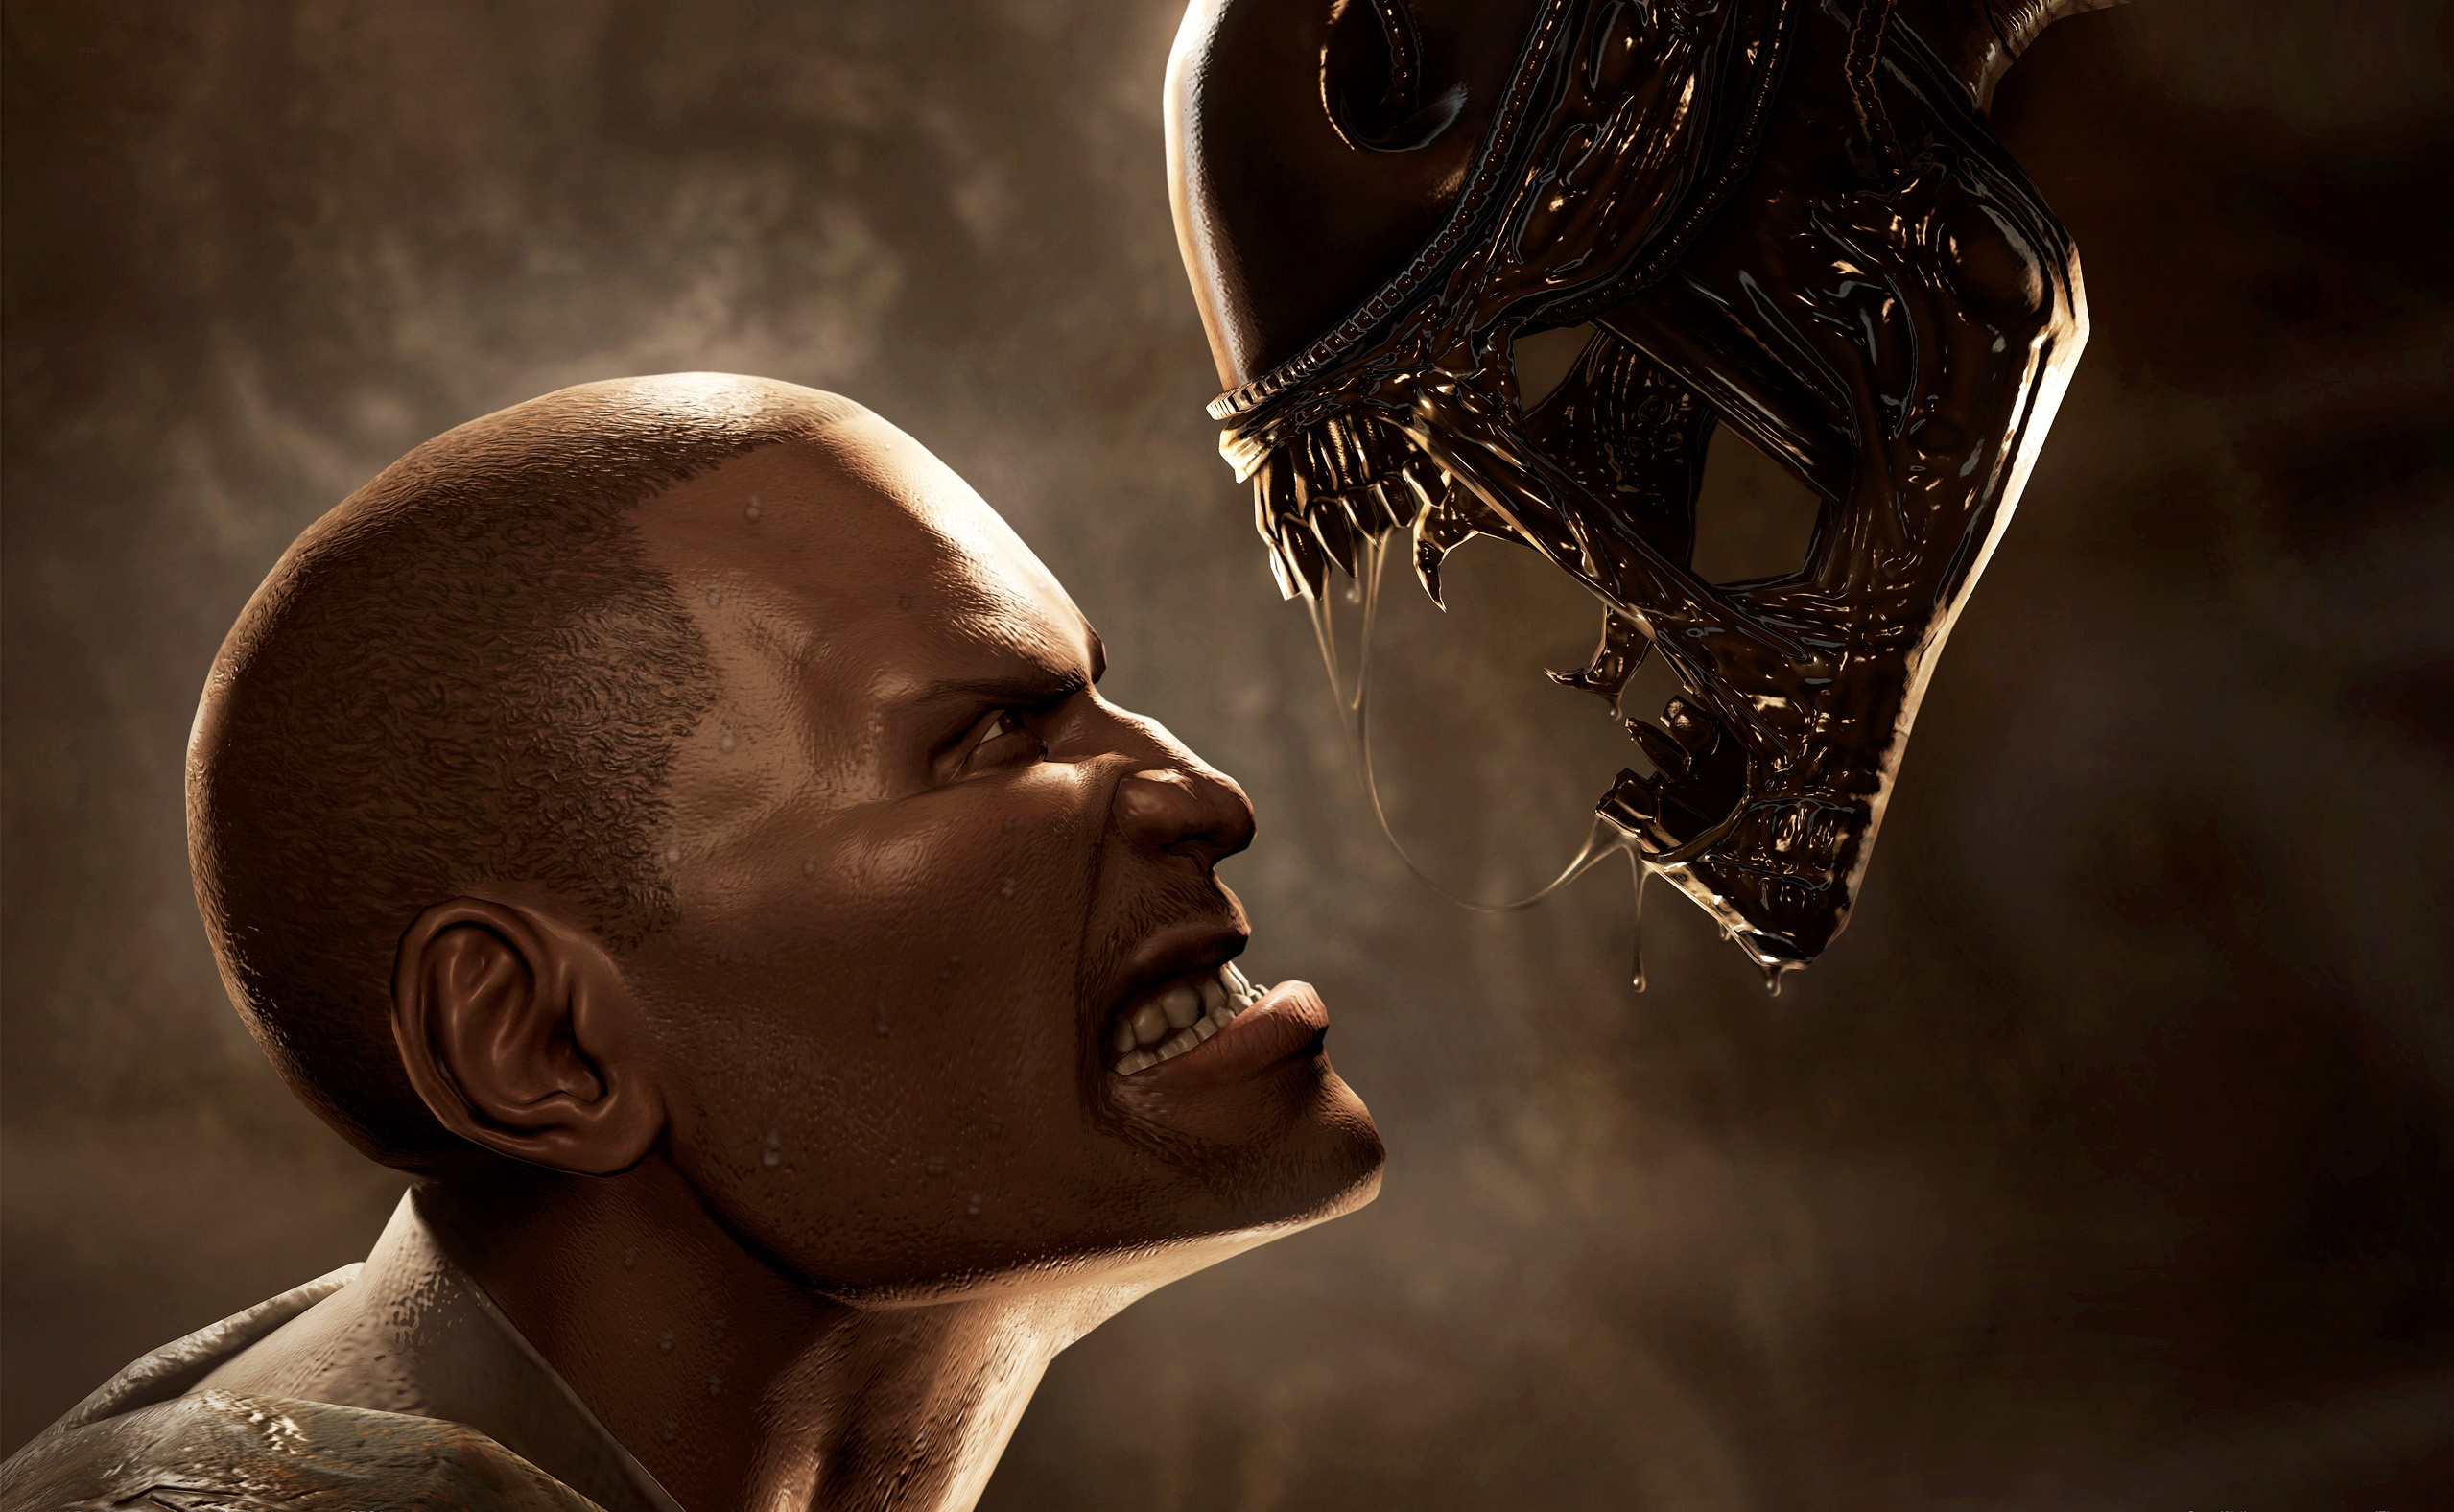 Download Alien Vs Predator Monstrous Face Wallpaper